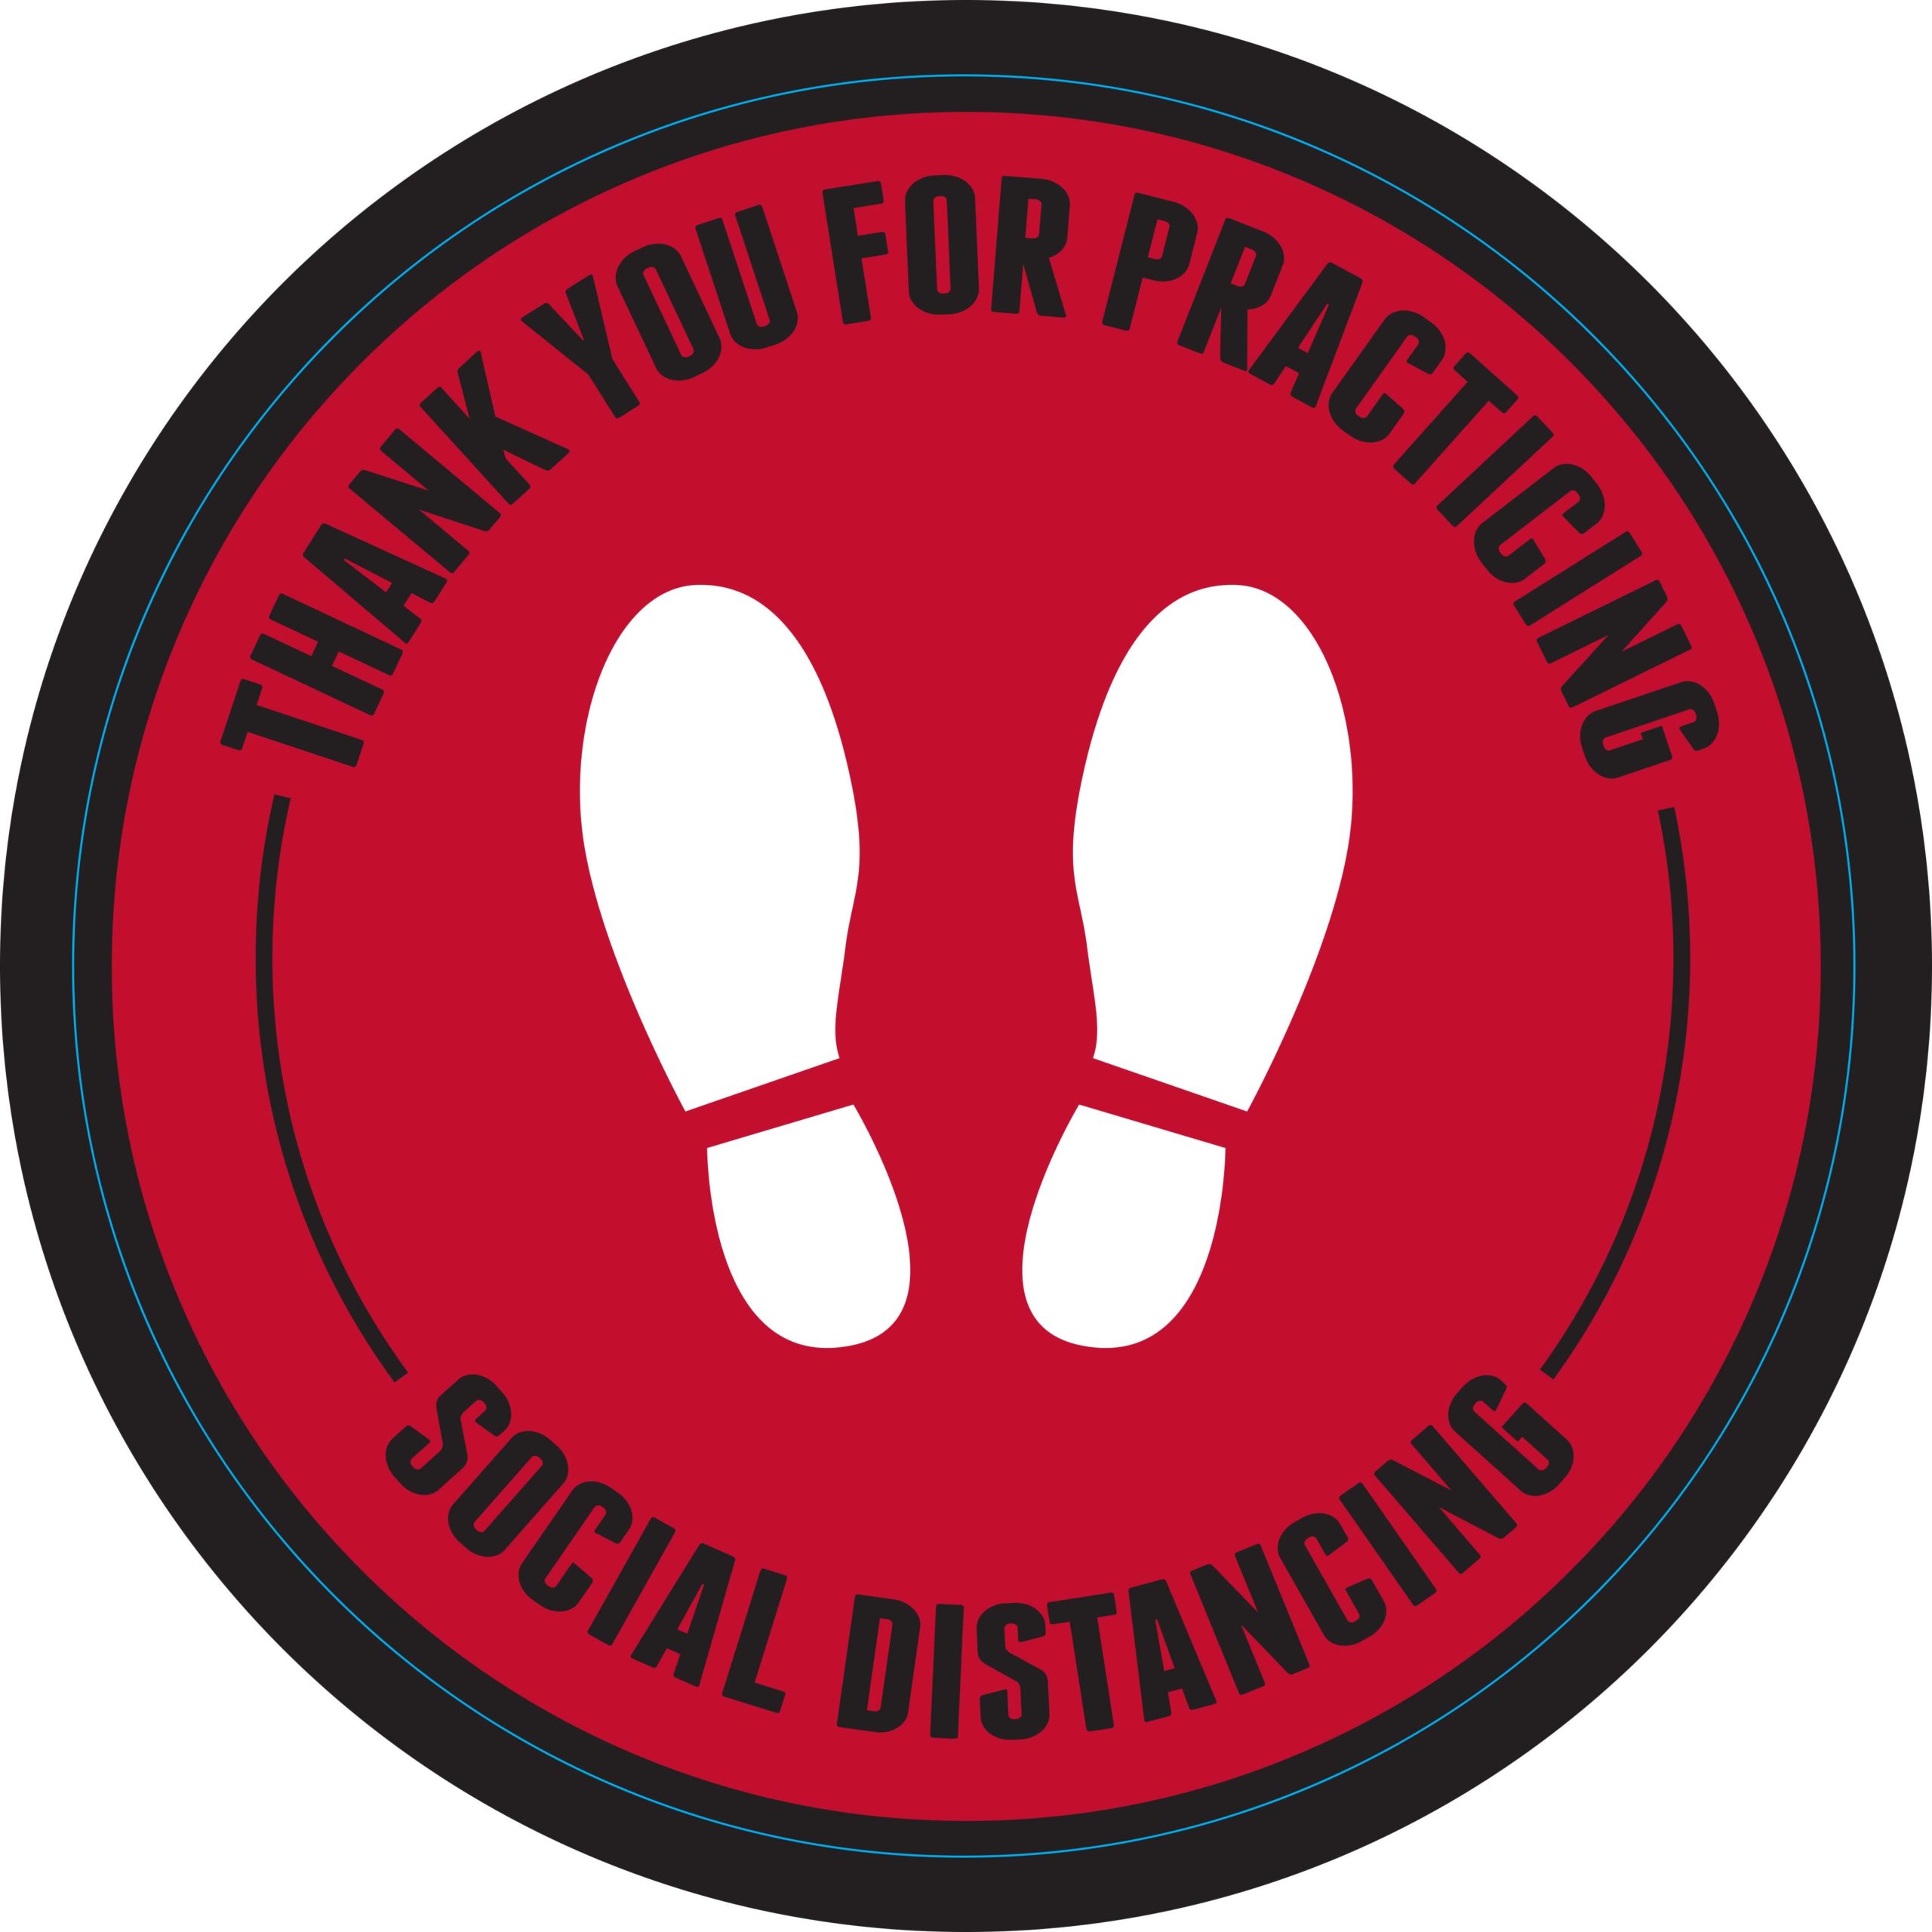 SOA - Social Distancing Floor 12" Diameter - RED - 4 pack